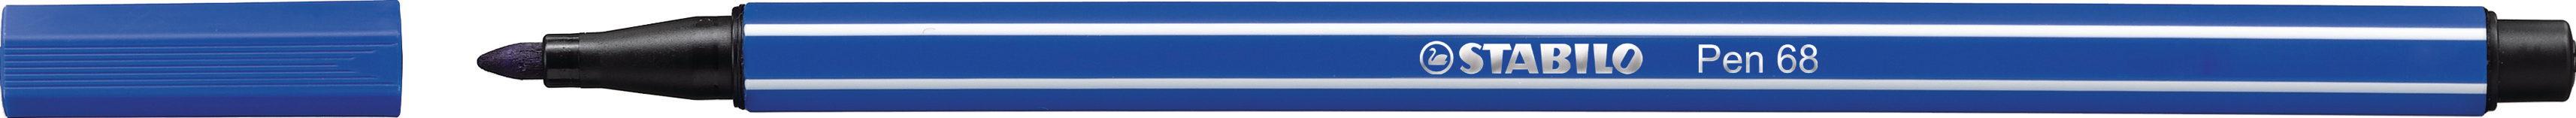 STABILO Stylo Fibre Pen 68 1mm 68/32 bleu marine